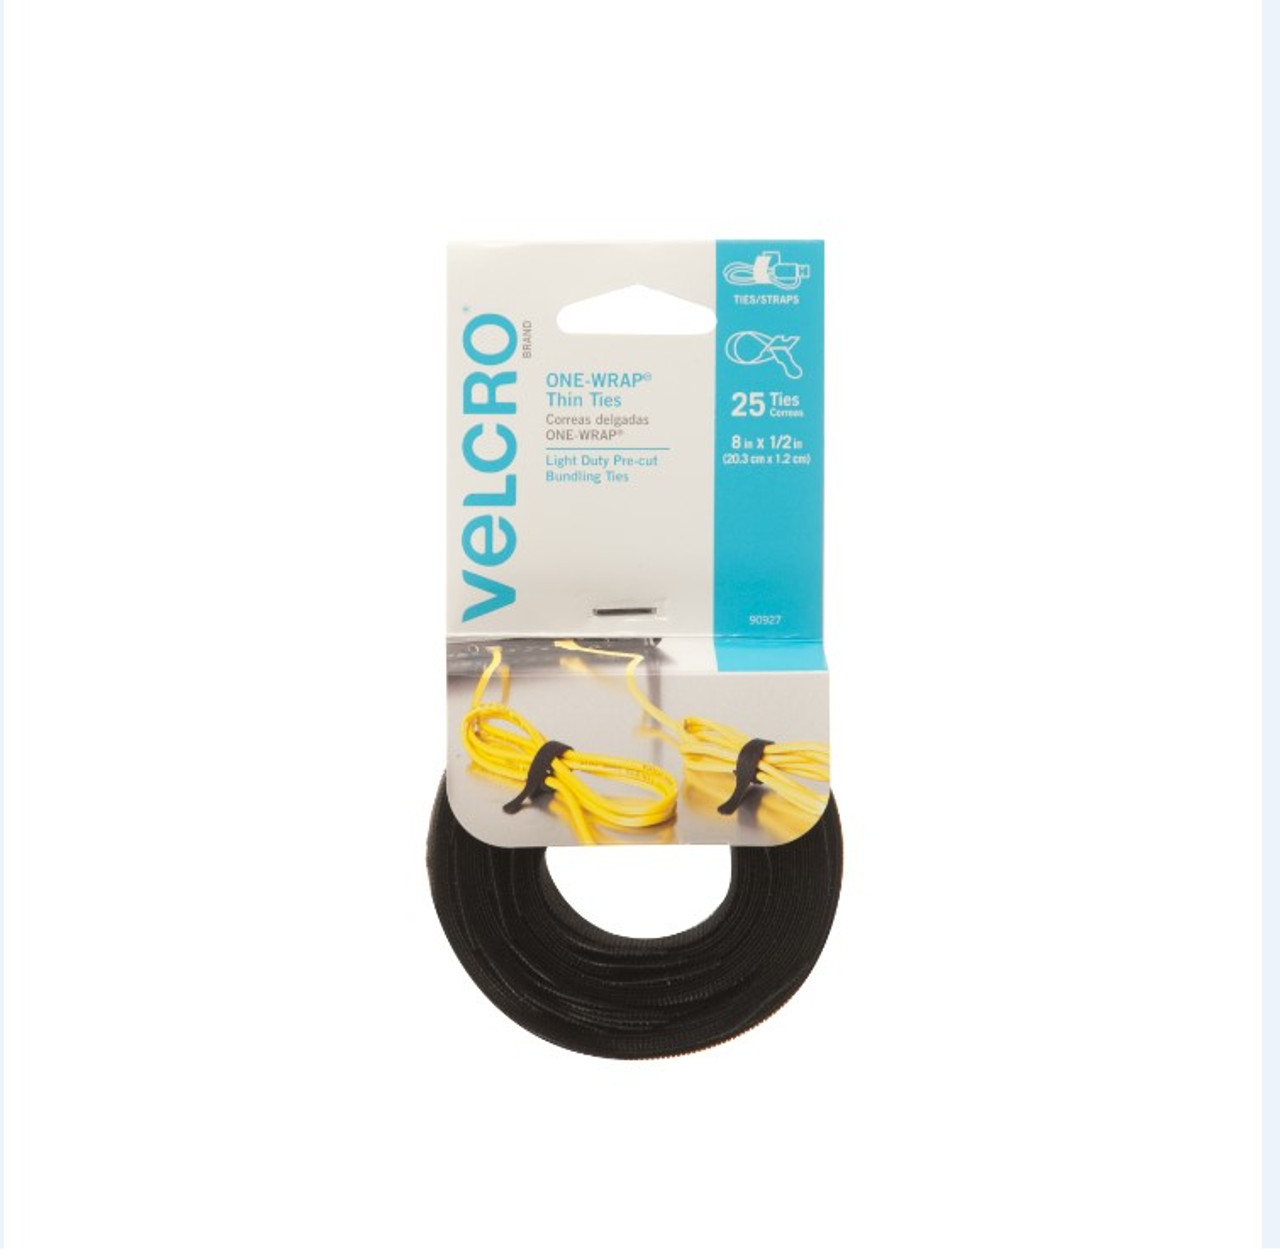 Velcro Brand - 1 inch Black VELSTRETCH Stretch Loop